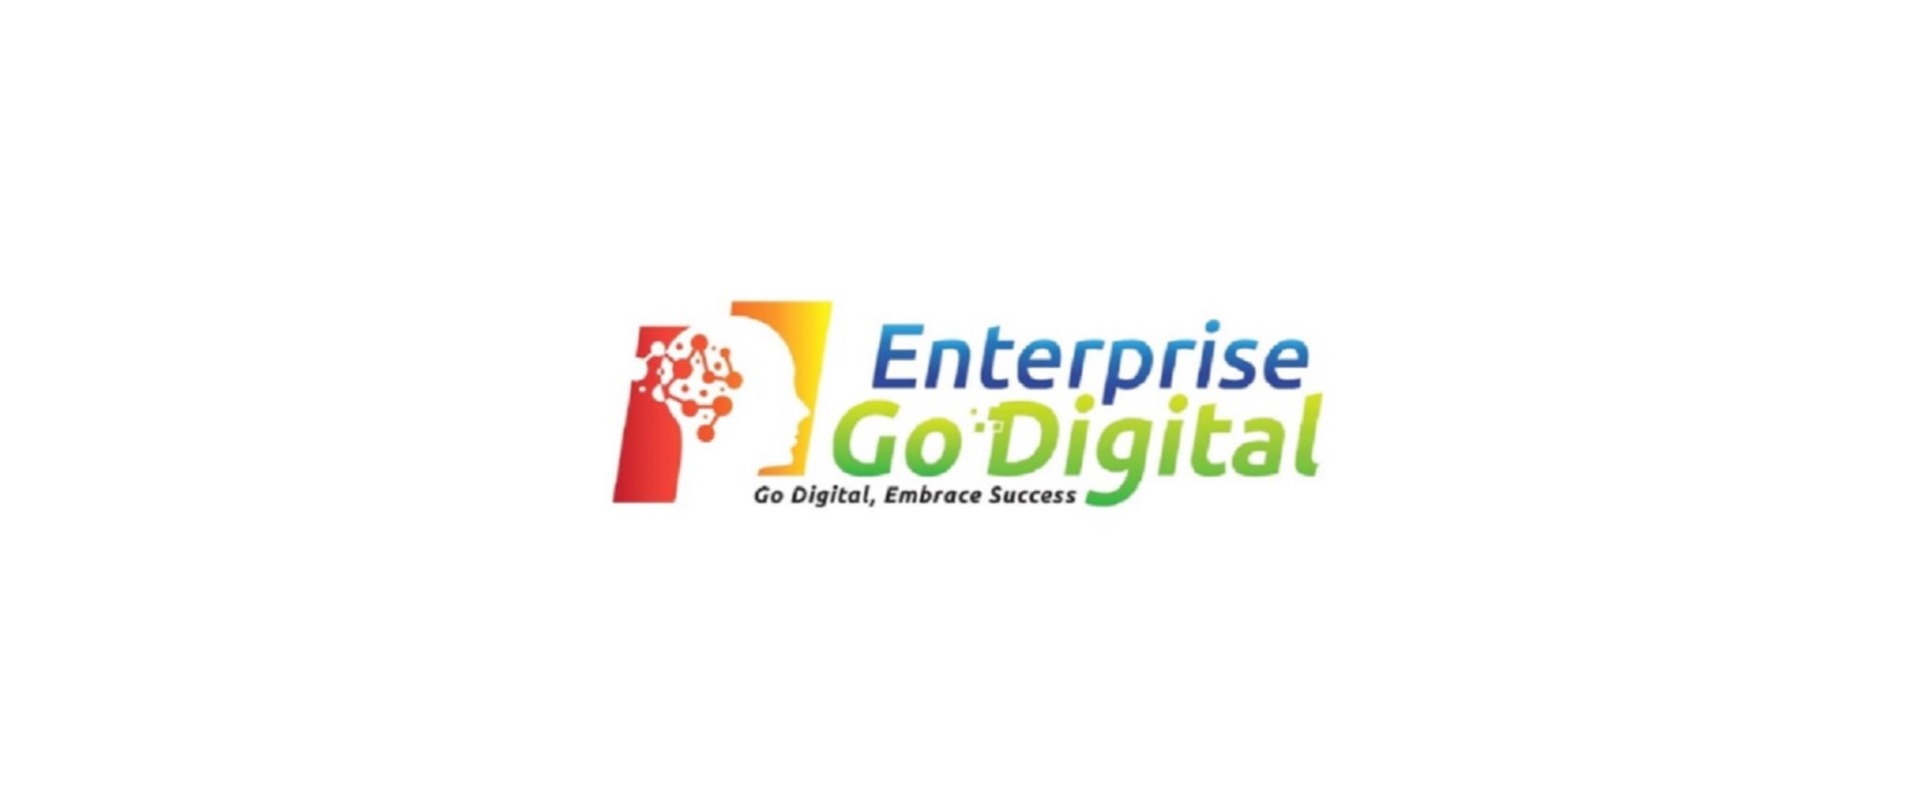 Watch the first two webinars in the Enterprise Go Digital series